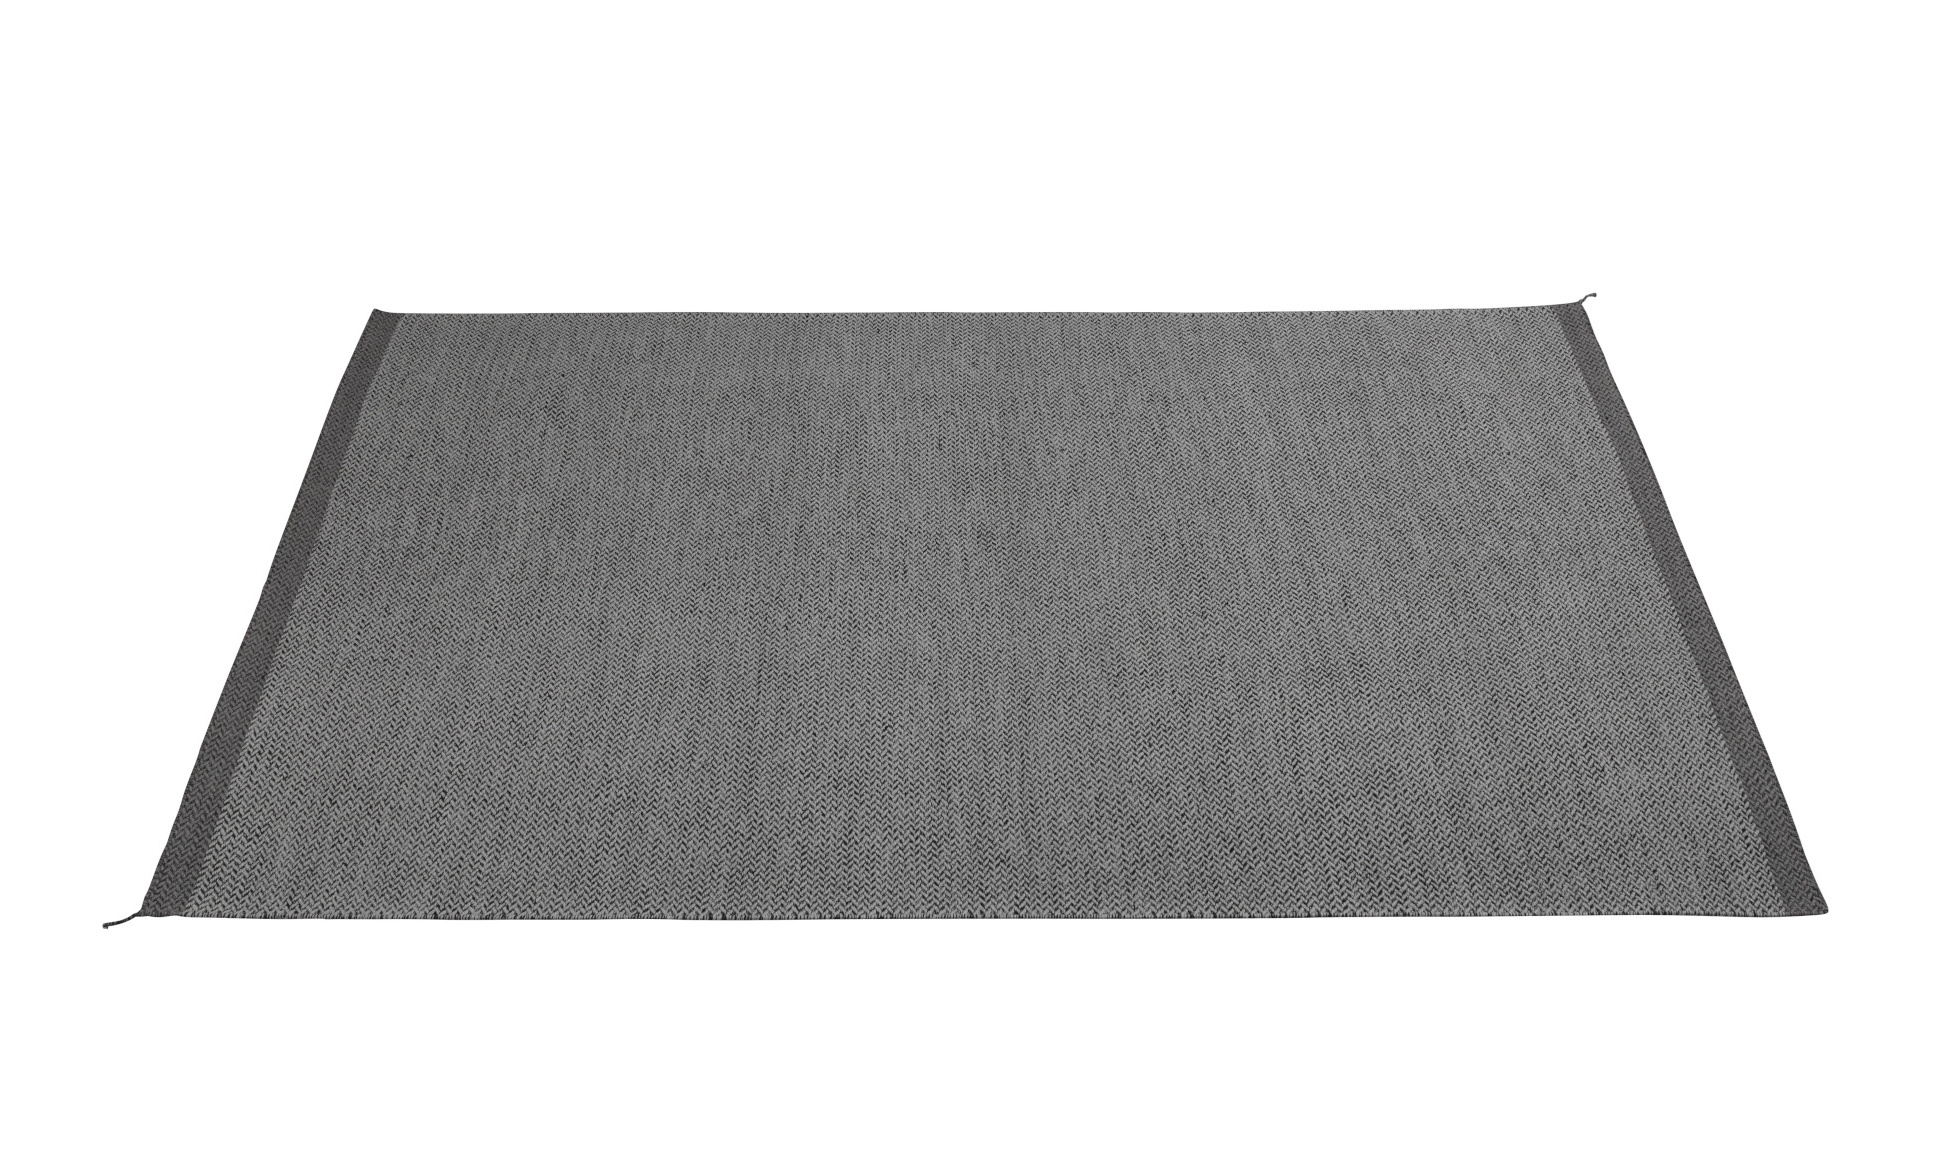 Ply Teppich, 270 x 360 cm, schwarz / weiß